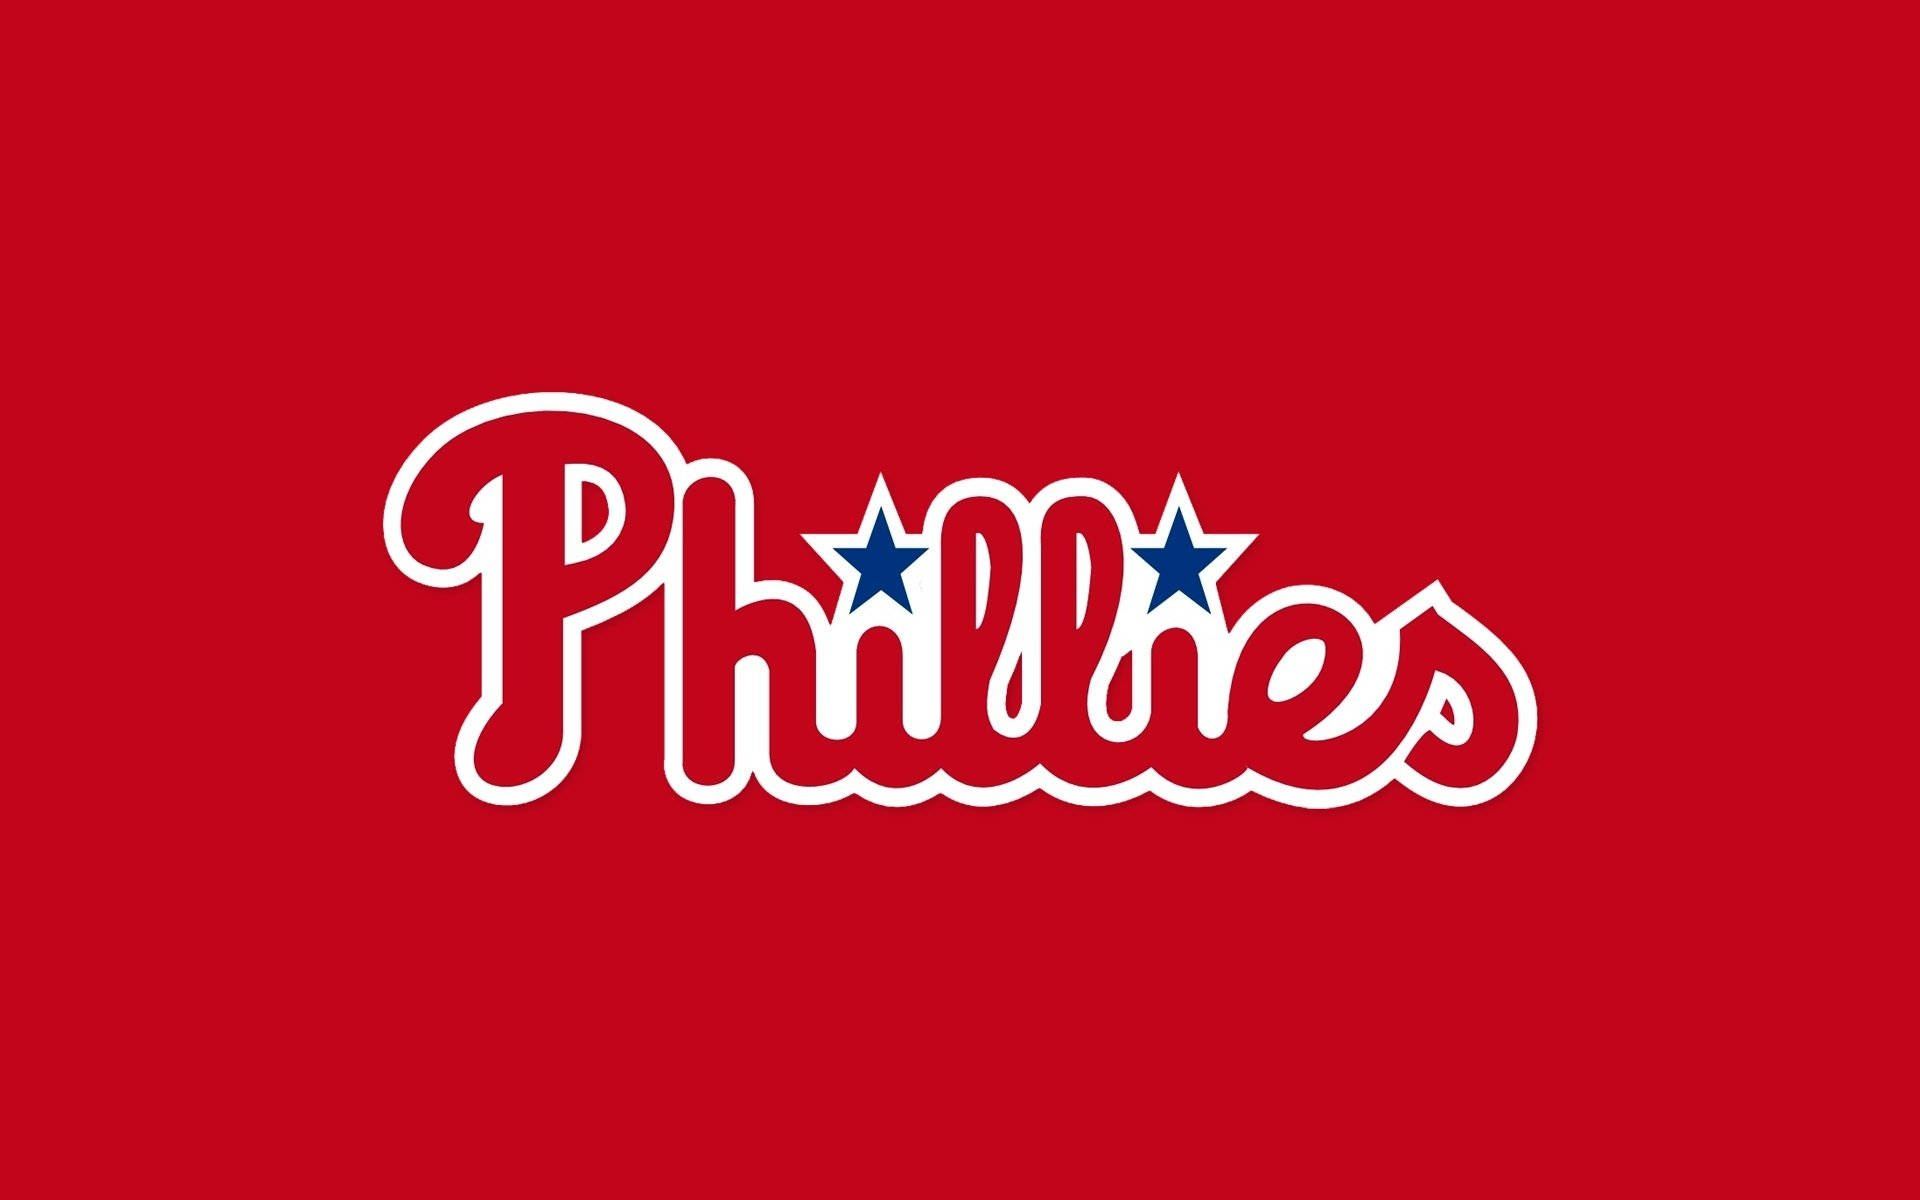 Philadelphia Phillies Word Mark Background